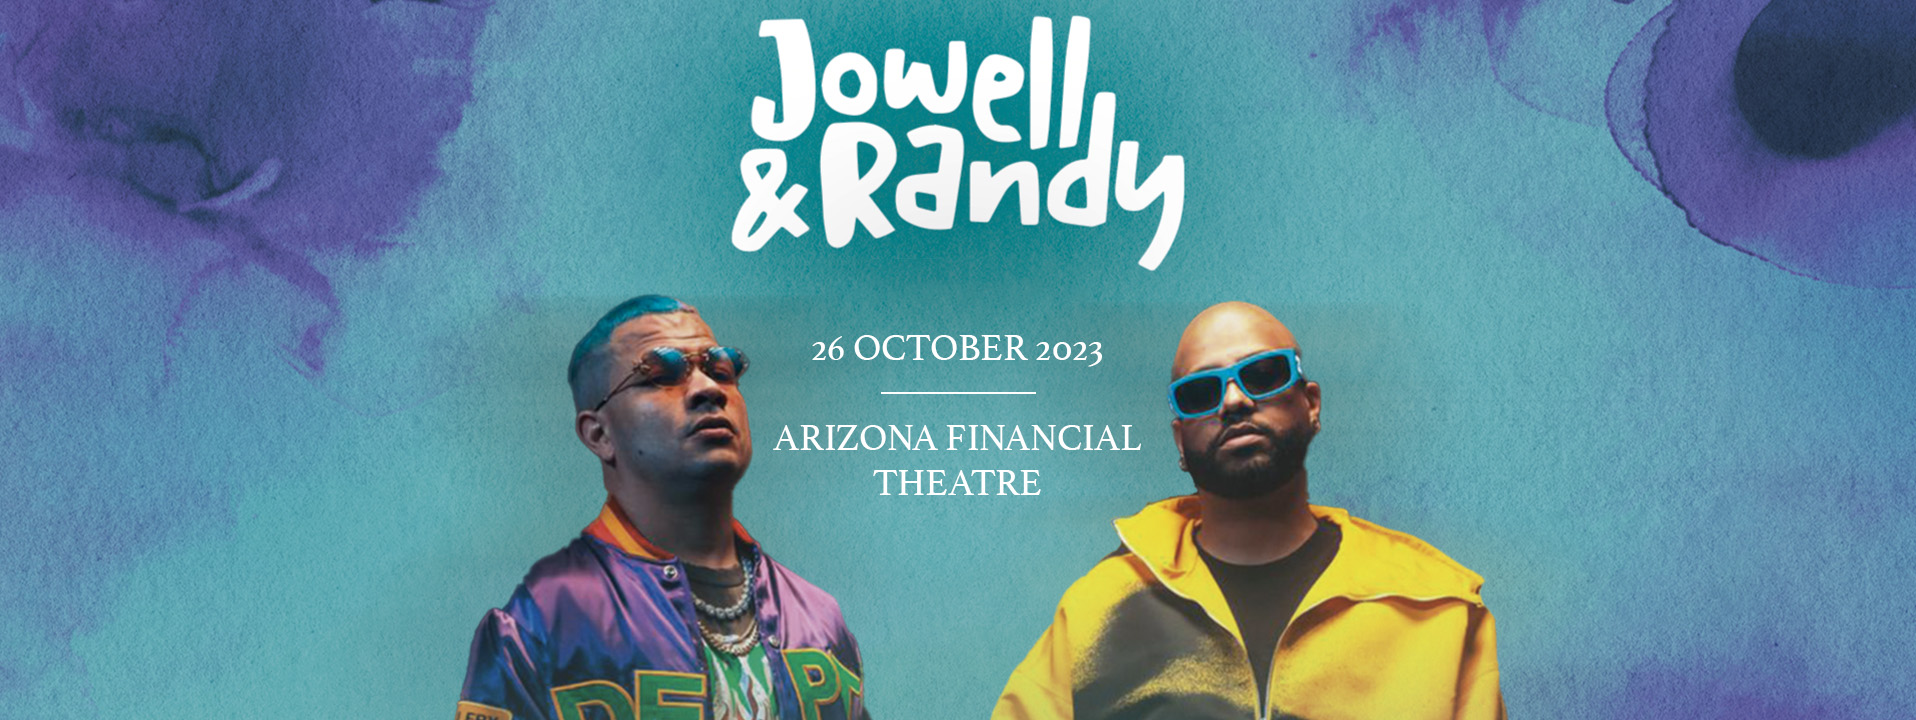 Jowell & Randy at Arizona Financial Theatre